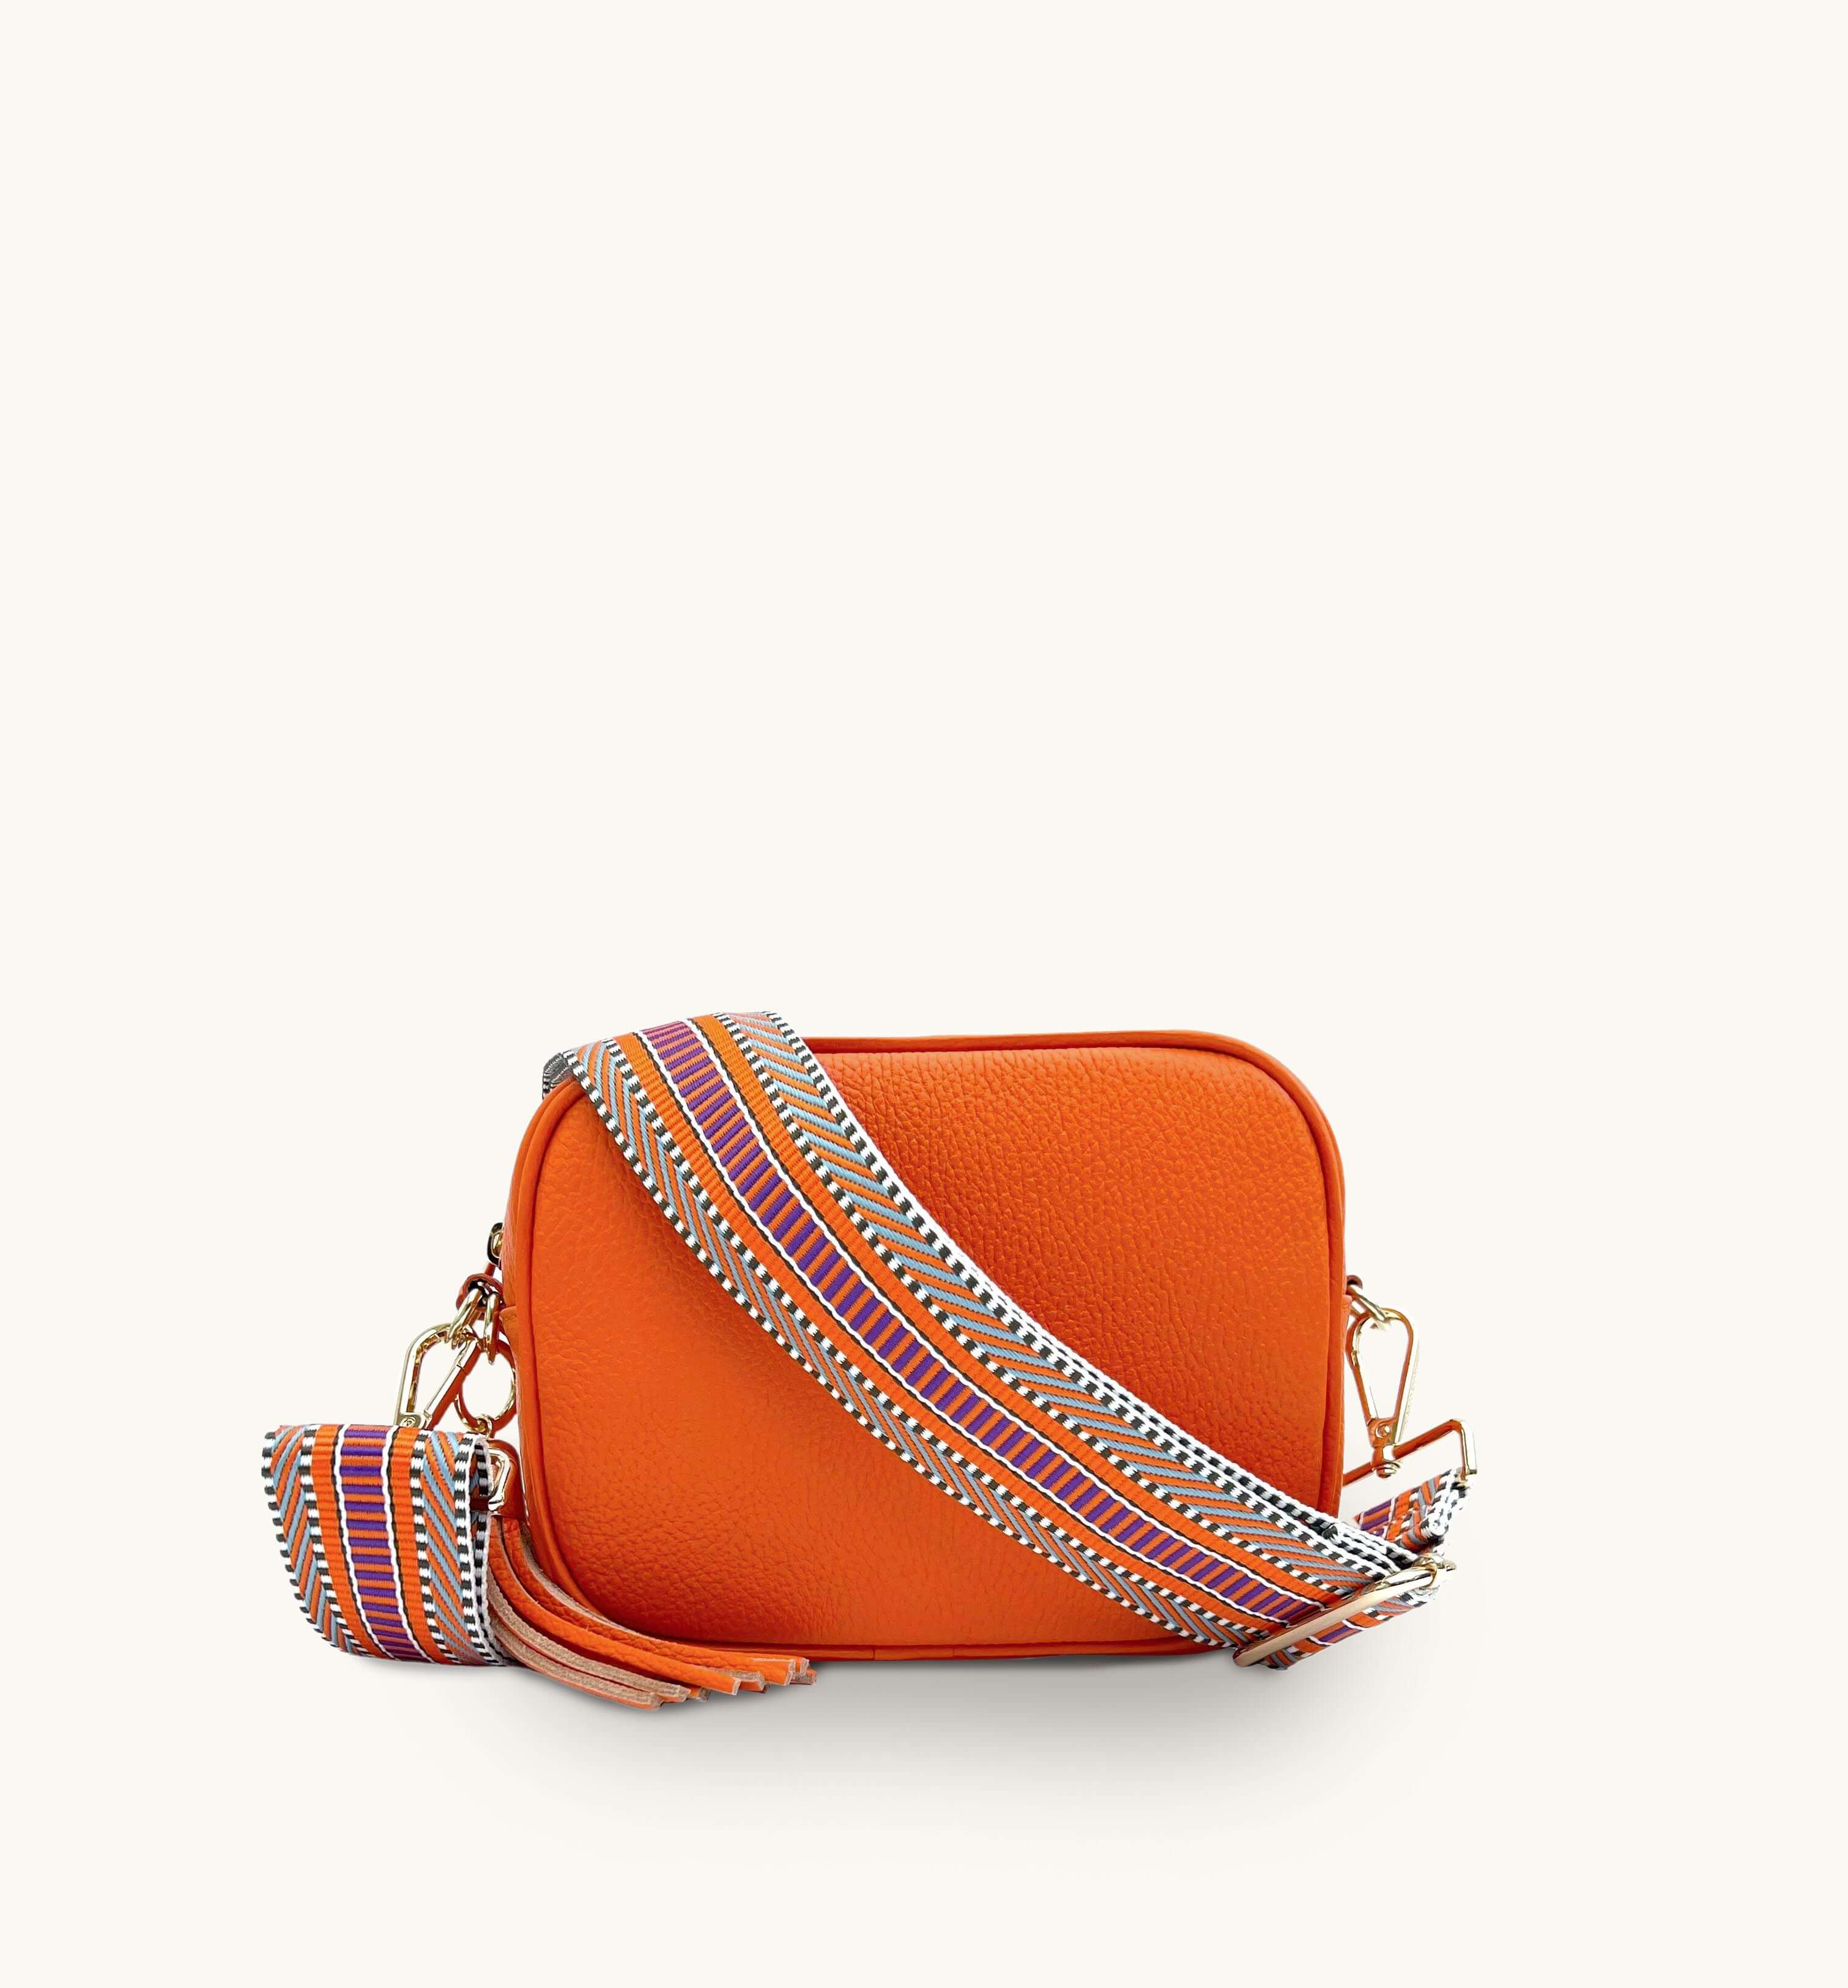 Orange Leather Crossbody Bag With Patterned Strap By Penelopetom